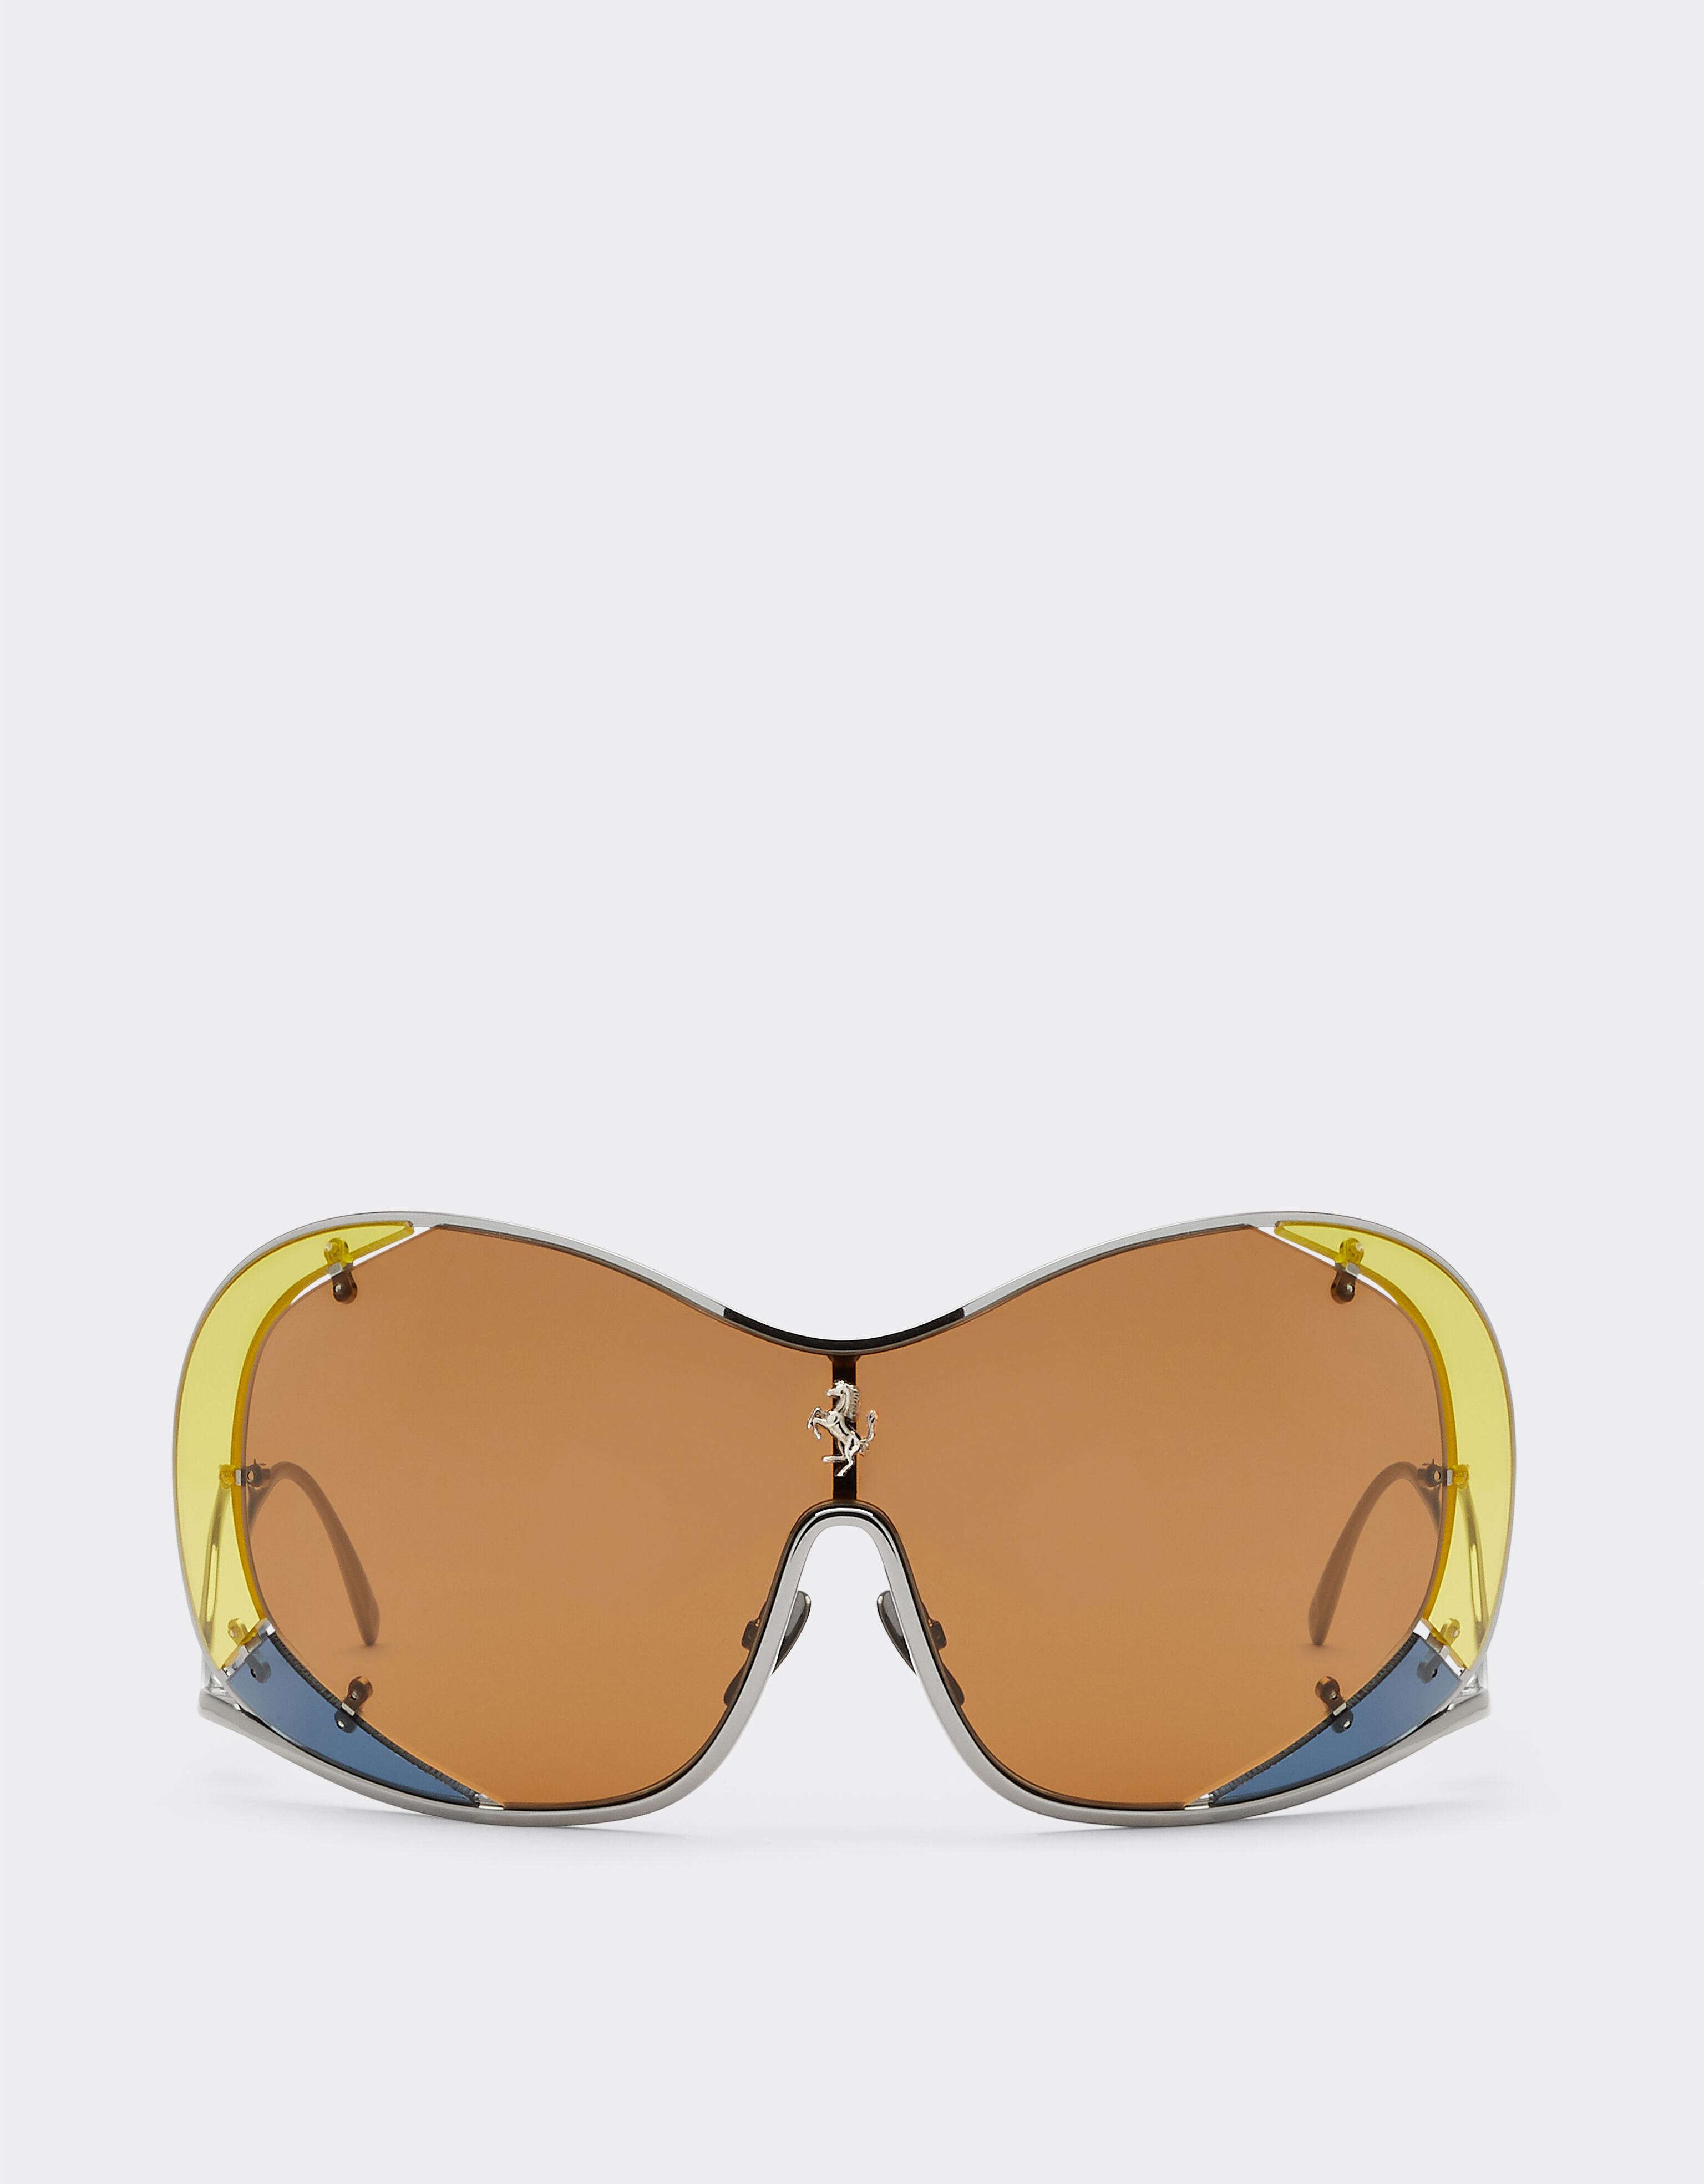 Ferrari Ferrari sunglasses with brown lenses Gold F0411f